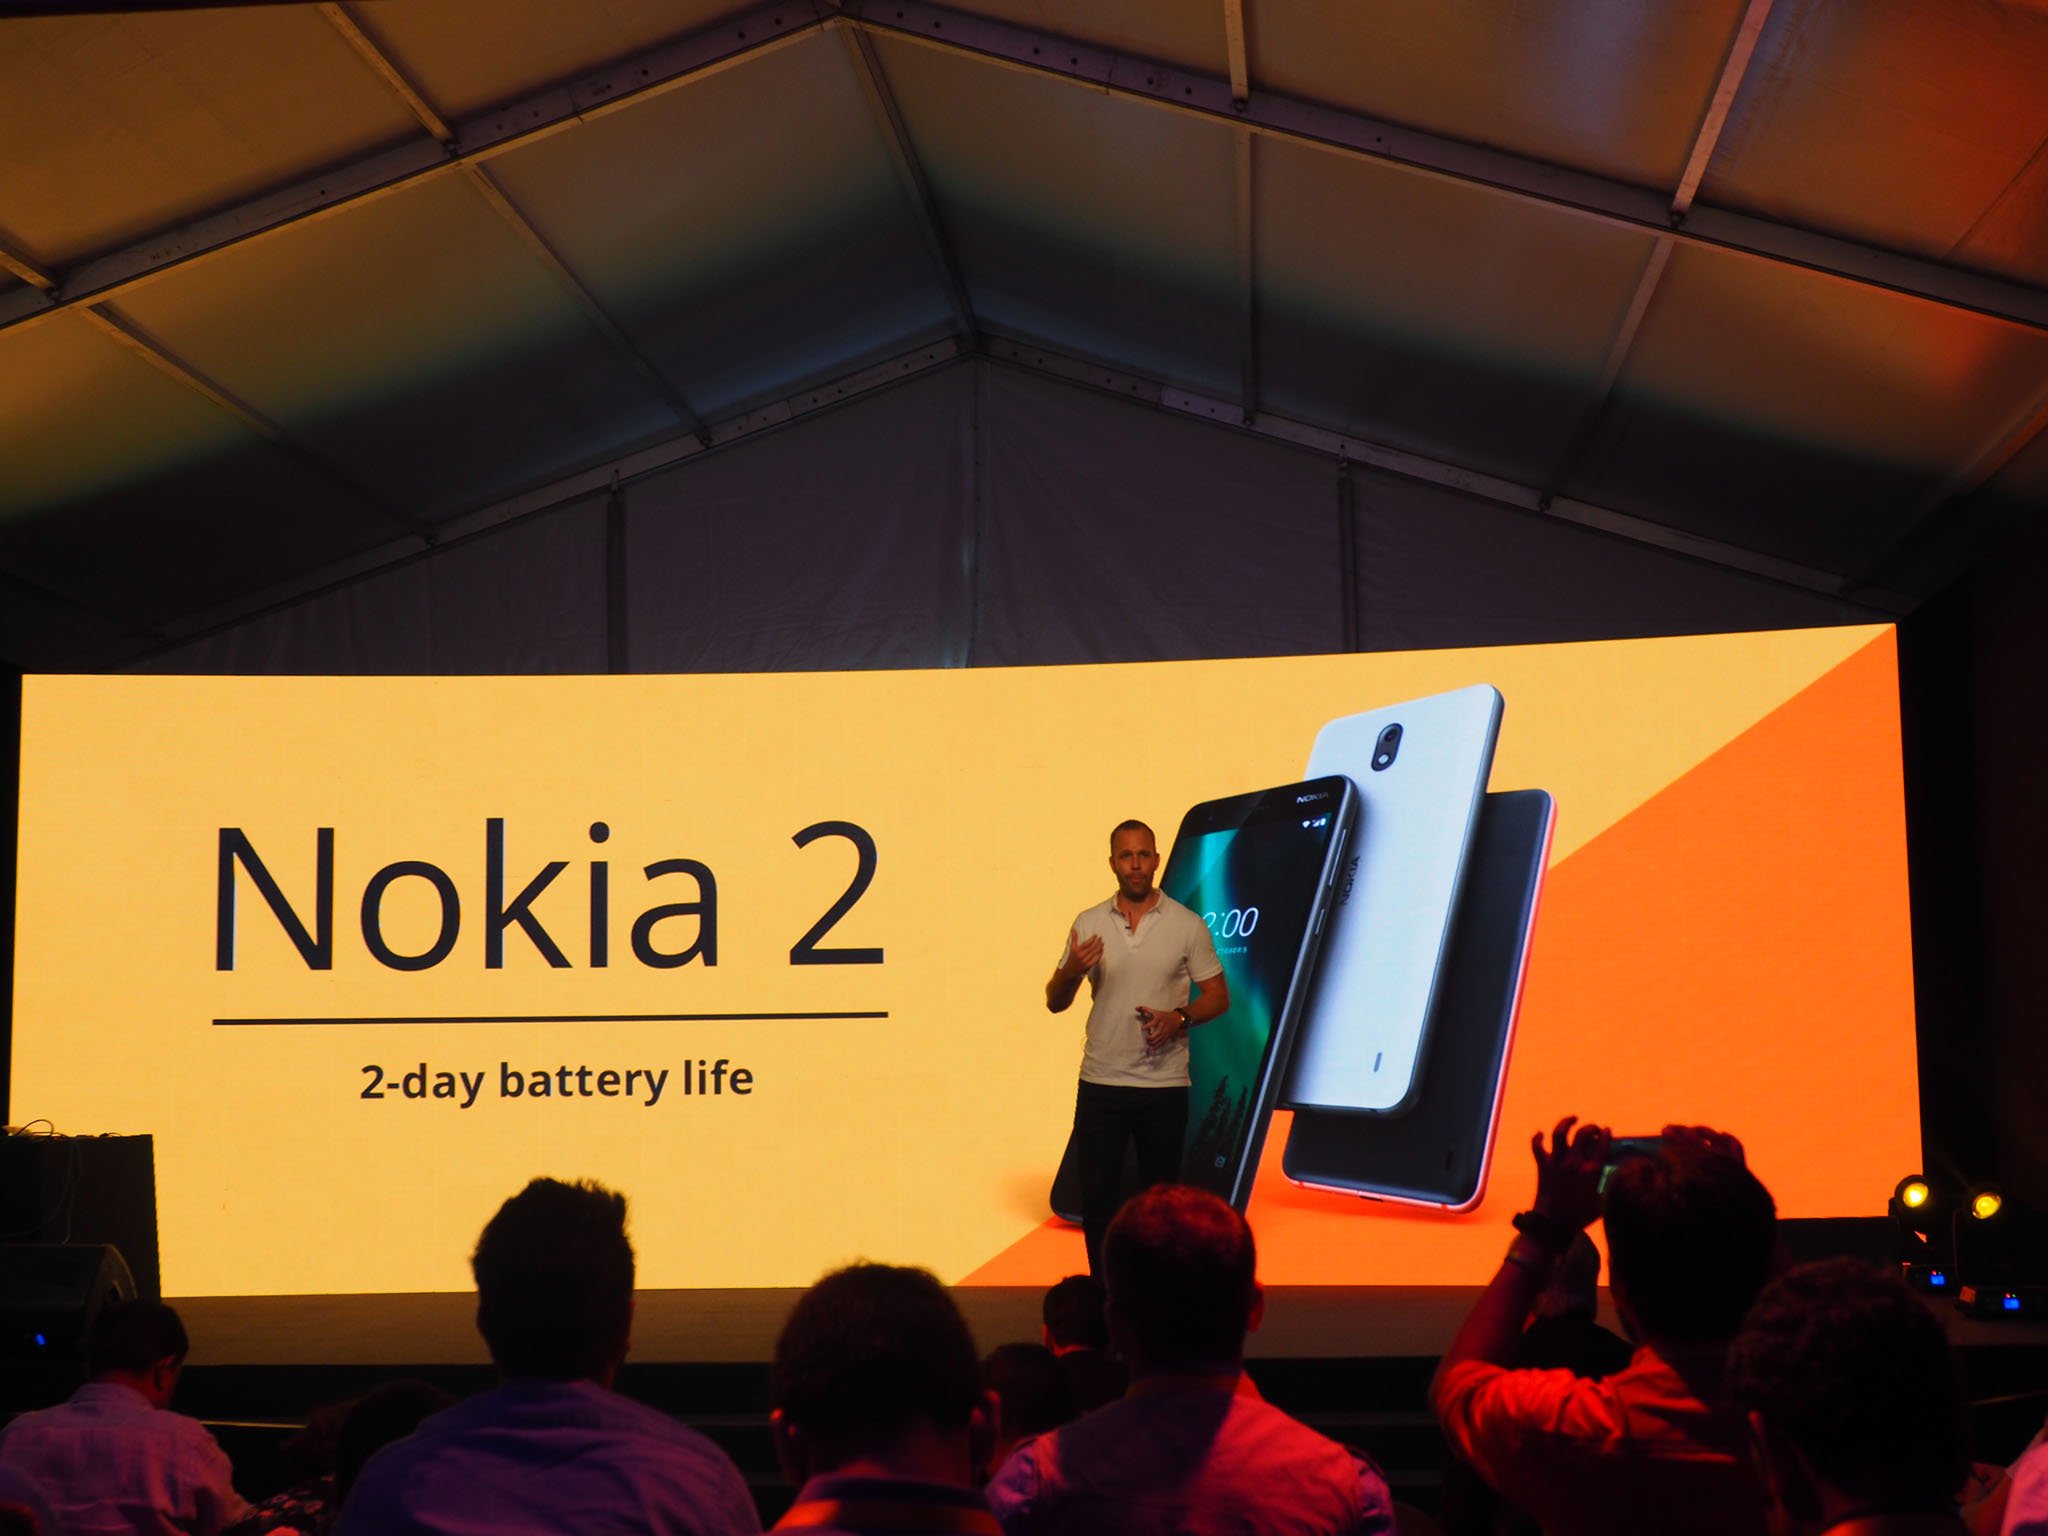 Nokia 2 unveil